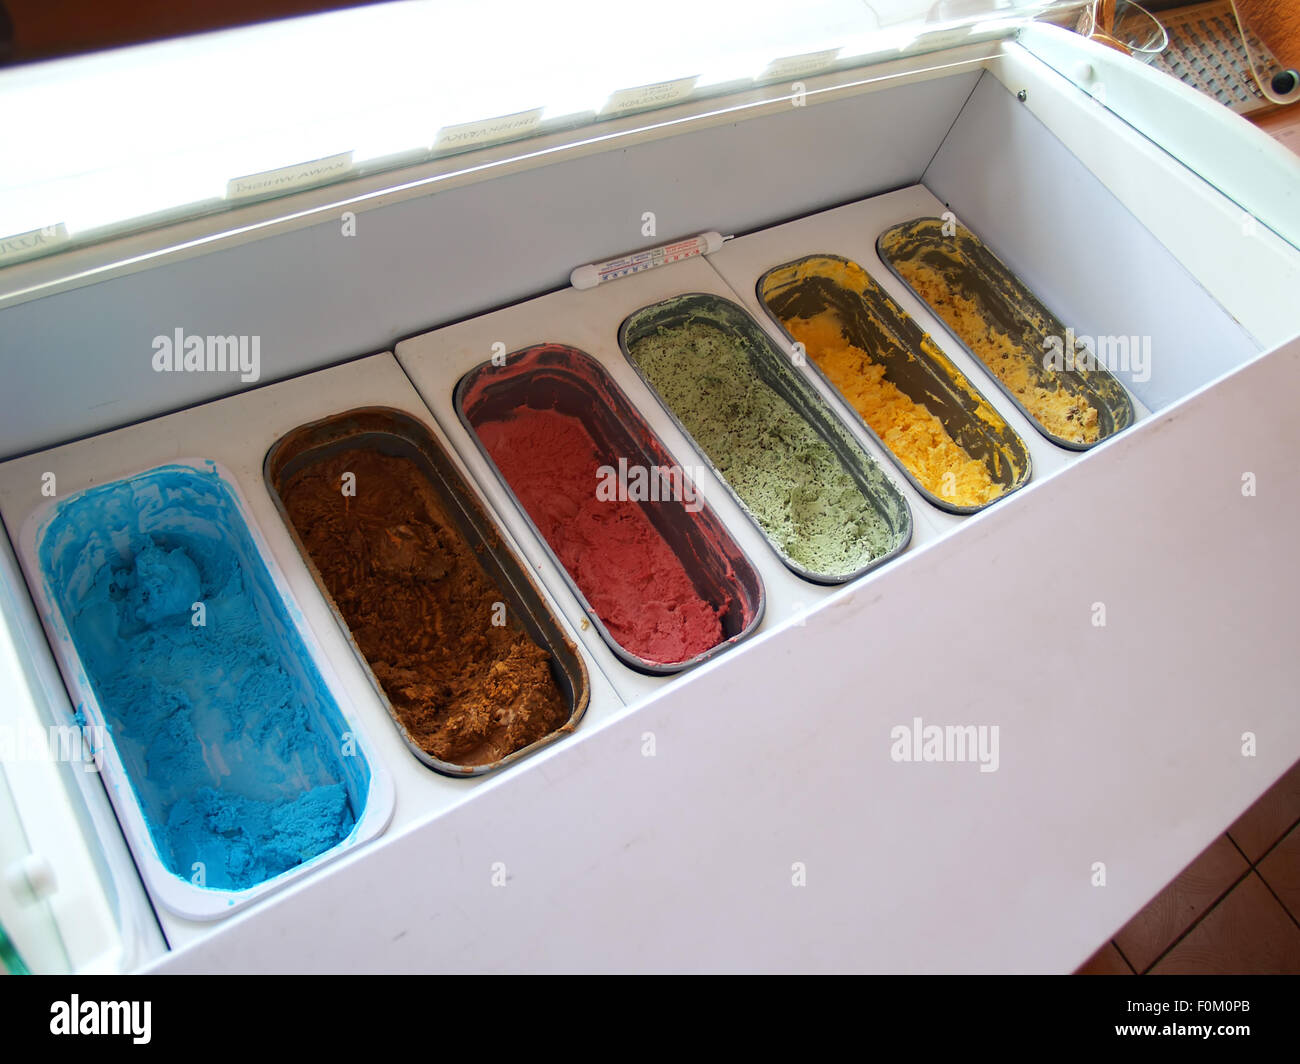 Ice cream display freezer, refrigerator. Stock Photo